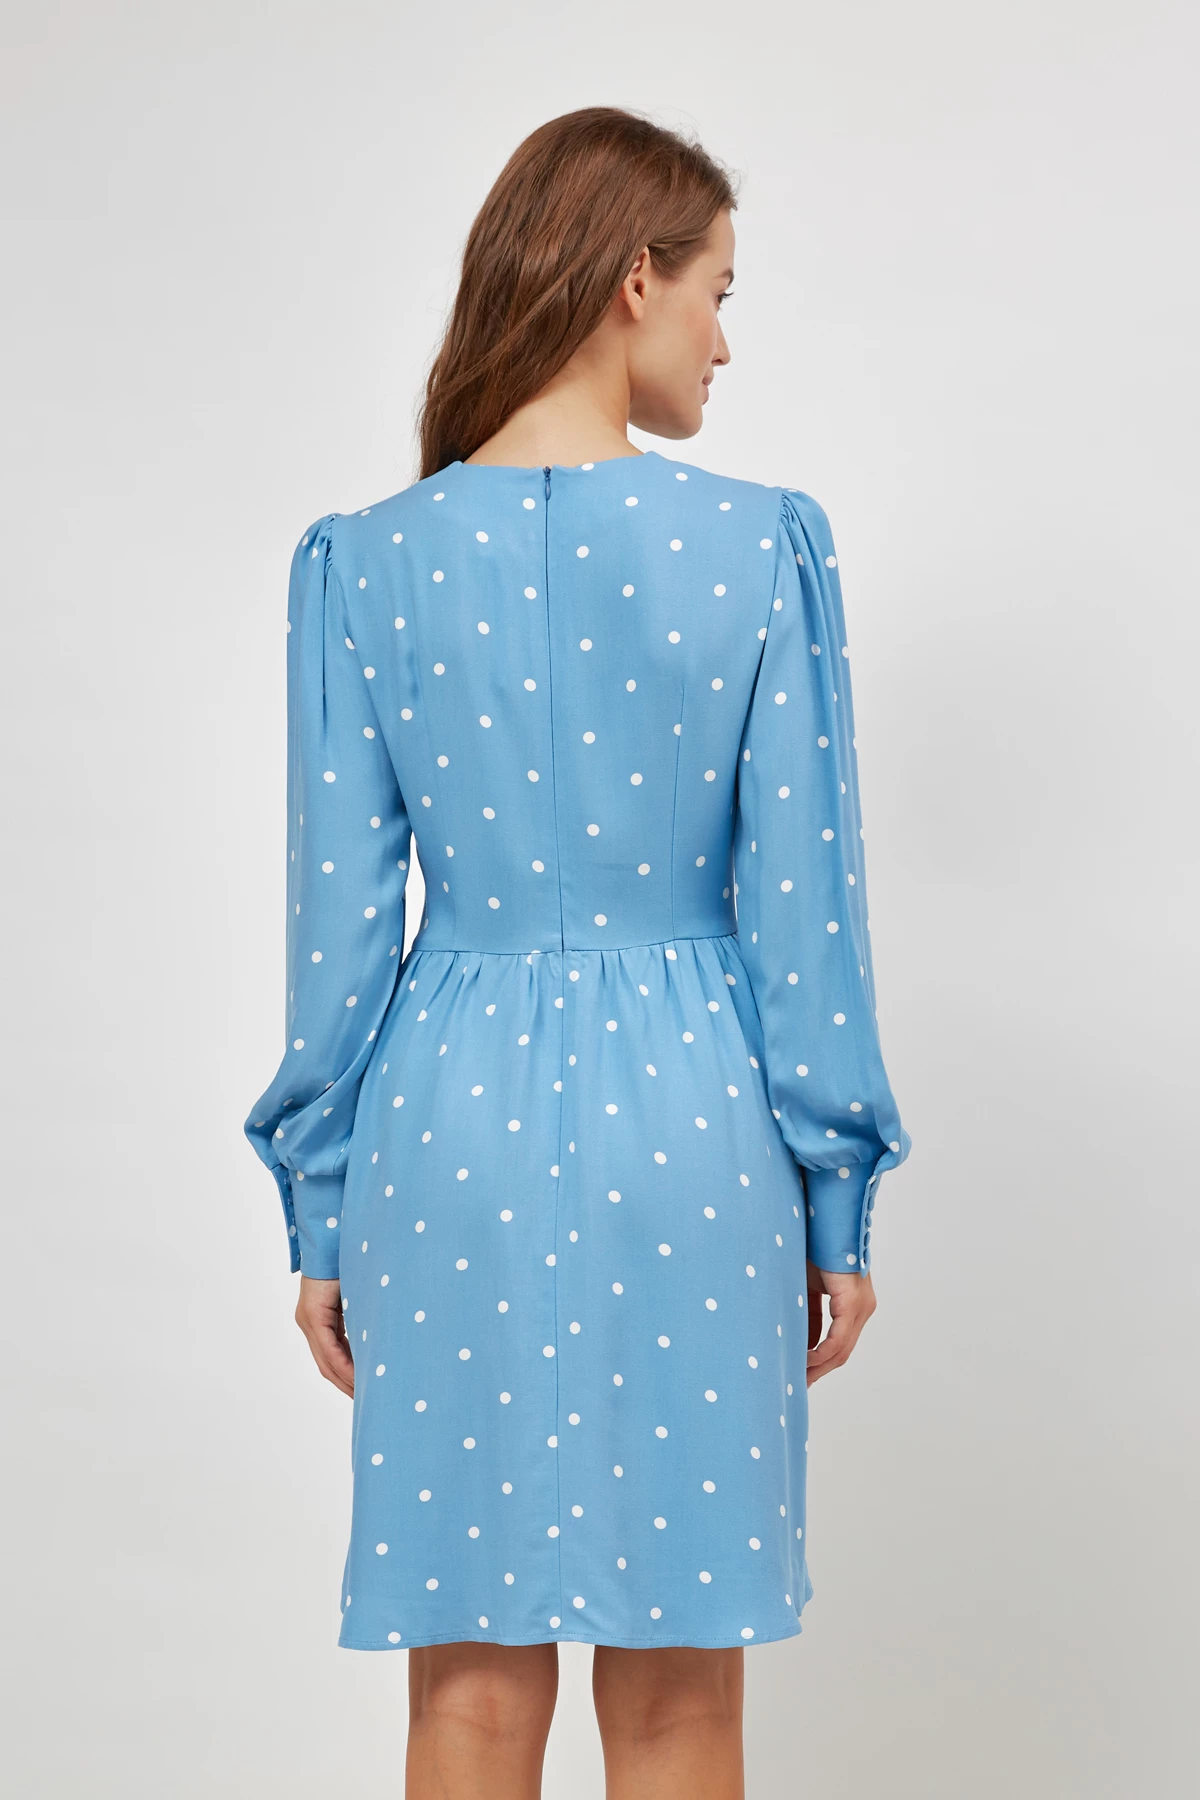 Blue viscose dress with white polka dots , photo 4